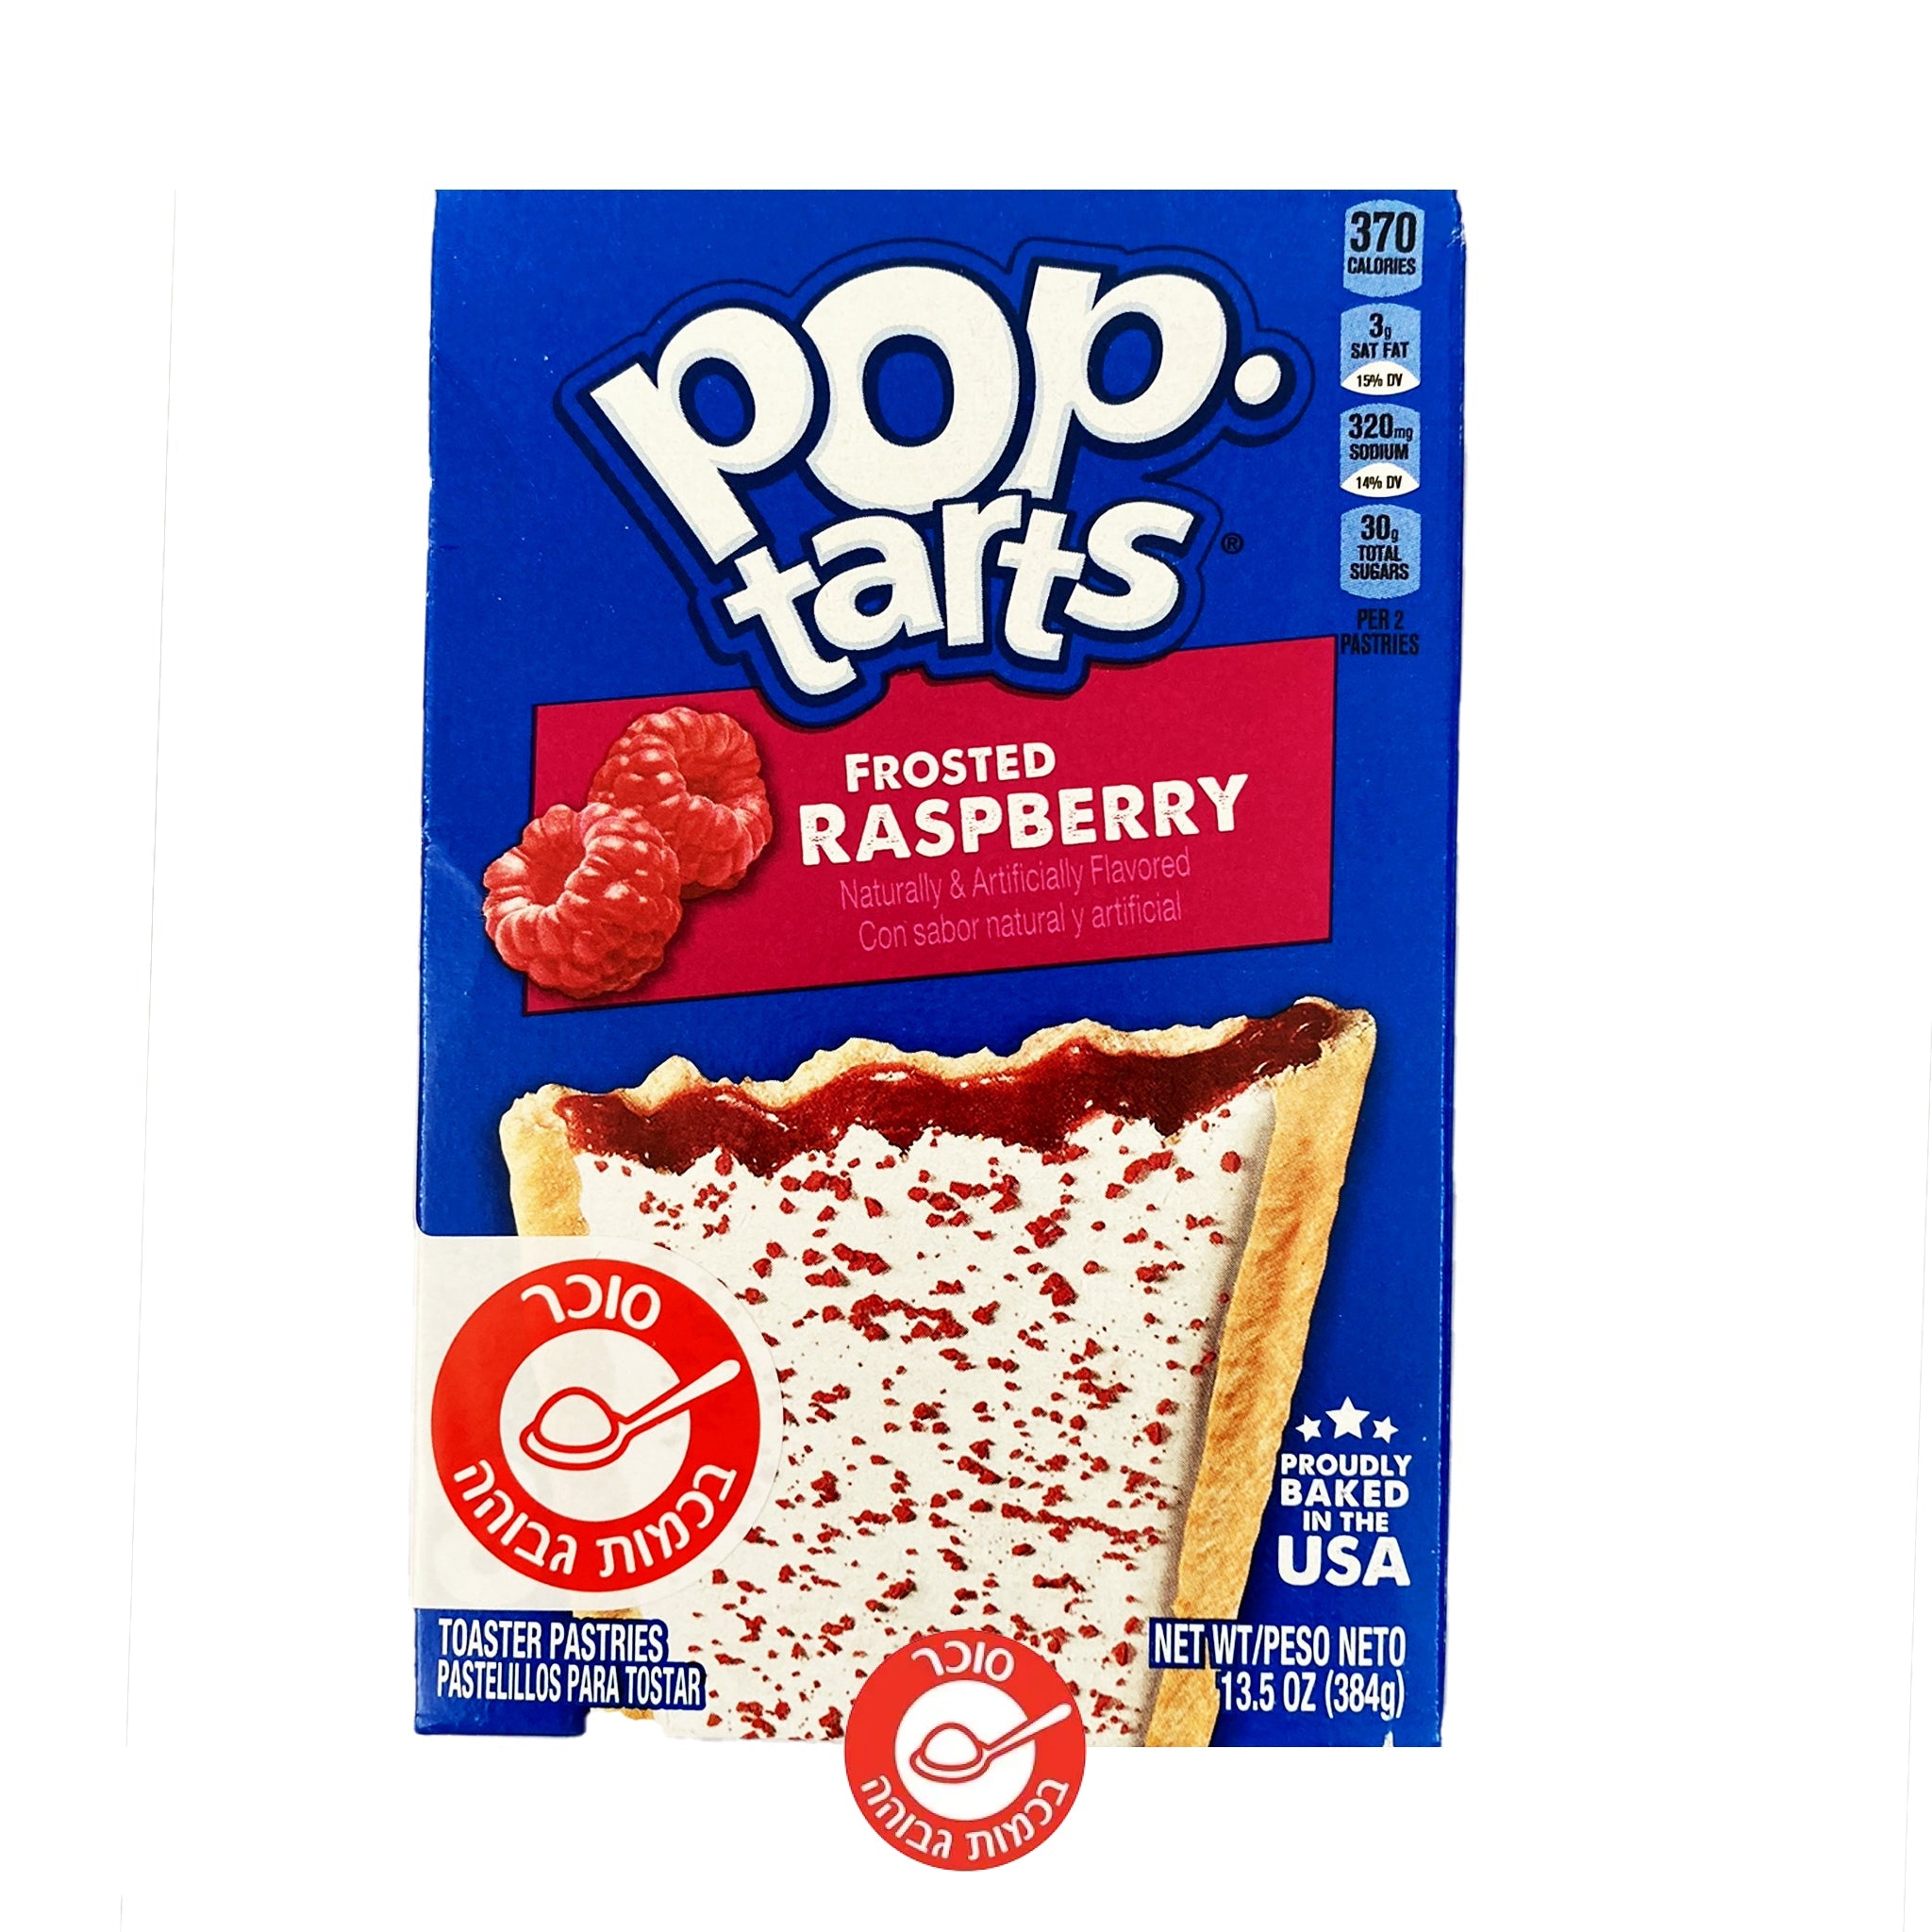 Pop Tarts Frosted Raspberry פופטארטס רסברי טעימים